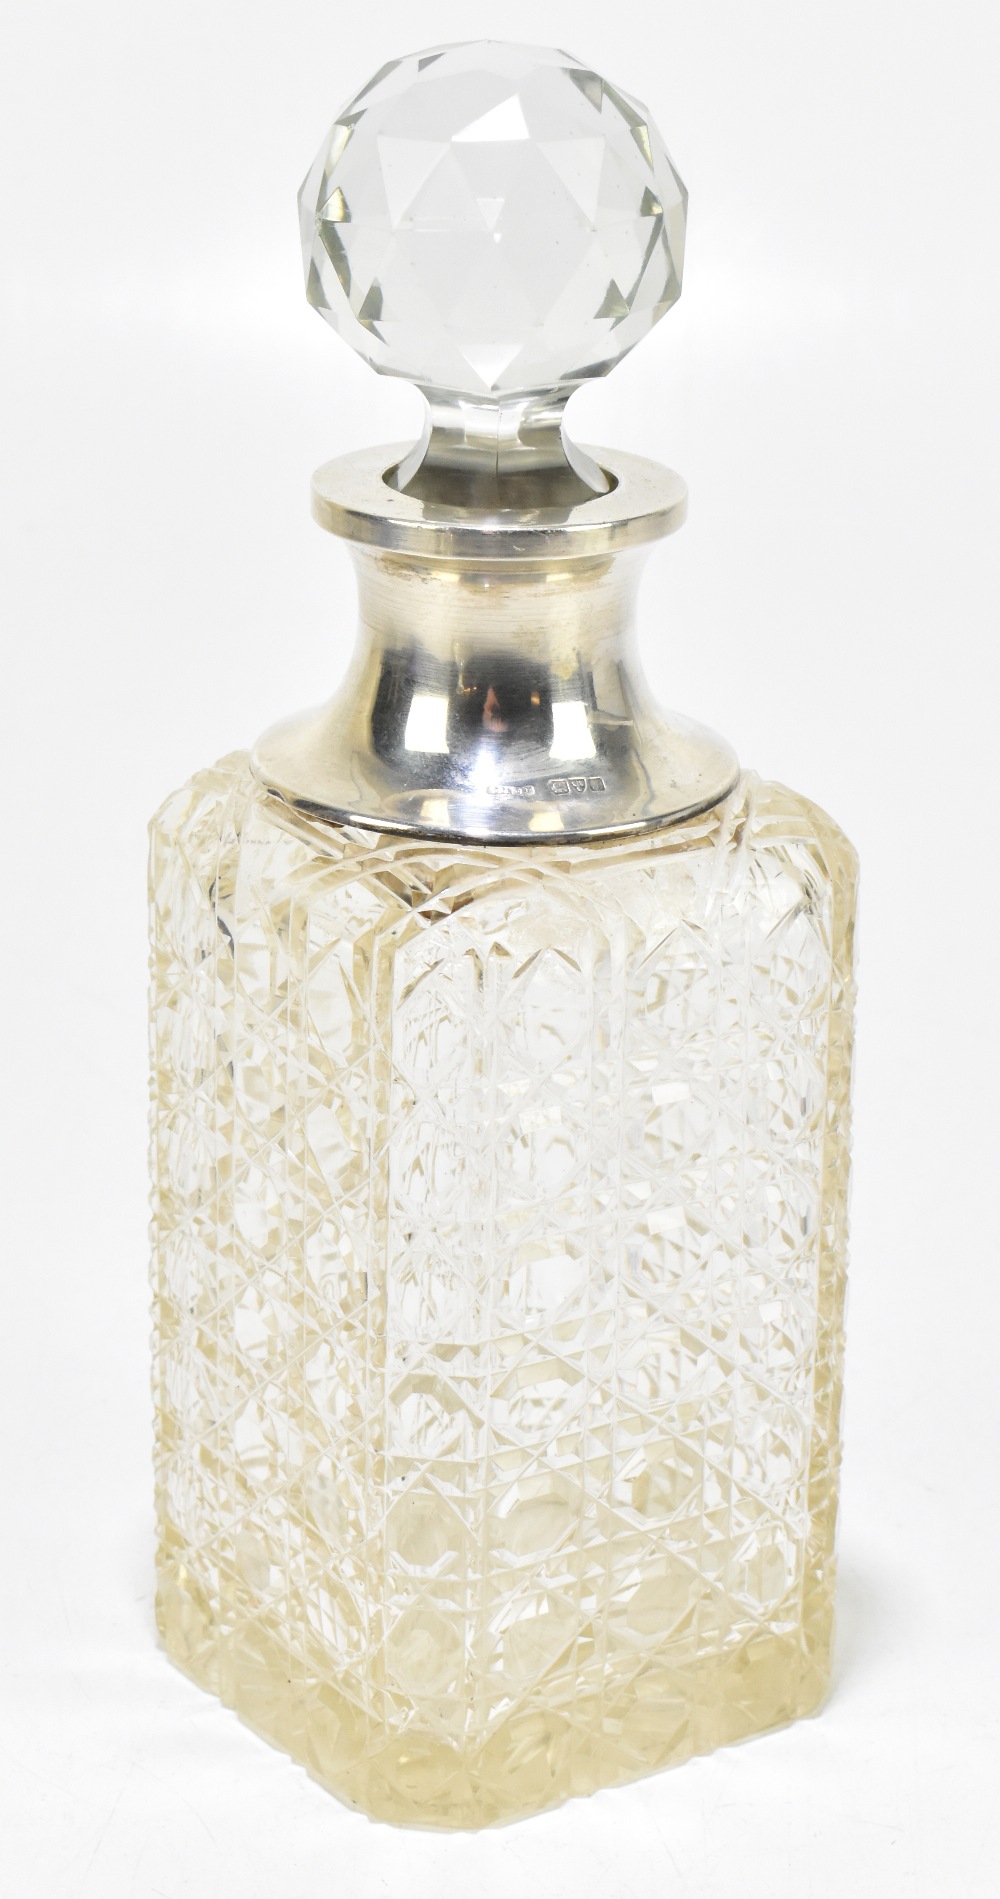 S BLANCKENSEE & SON LTD; an Edward VII hallmarked silver mounted hobnail cut glass decanter, marks